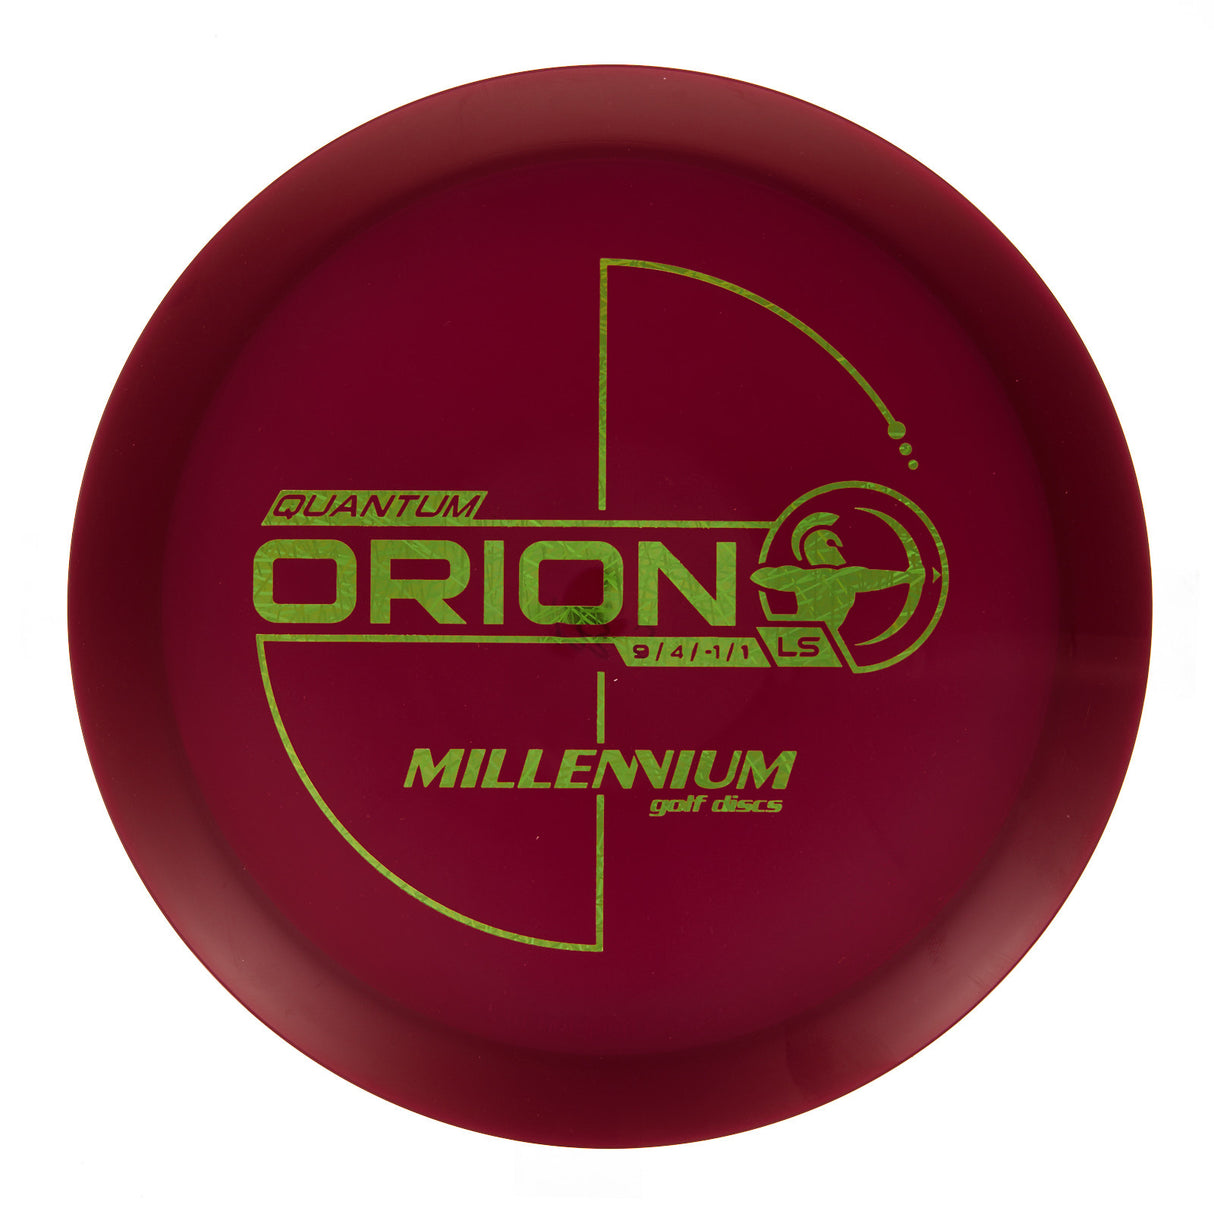 Millennium Orion LS - Quantum  174g | Style 0002